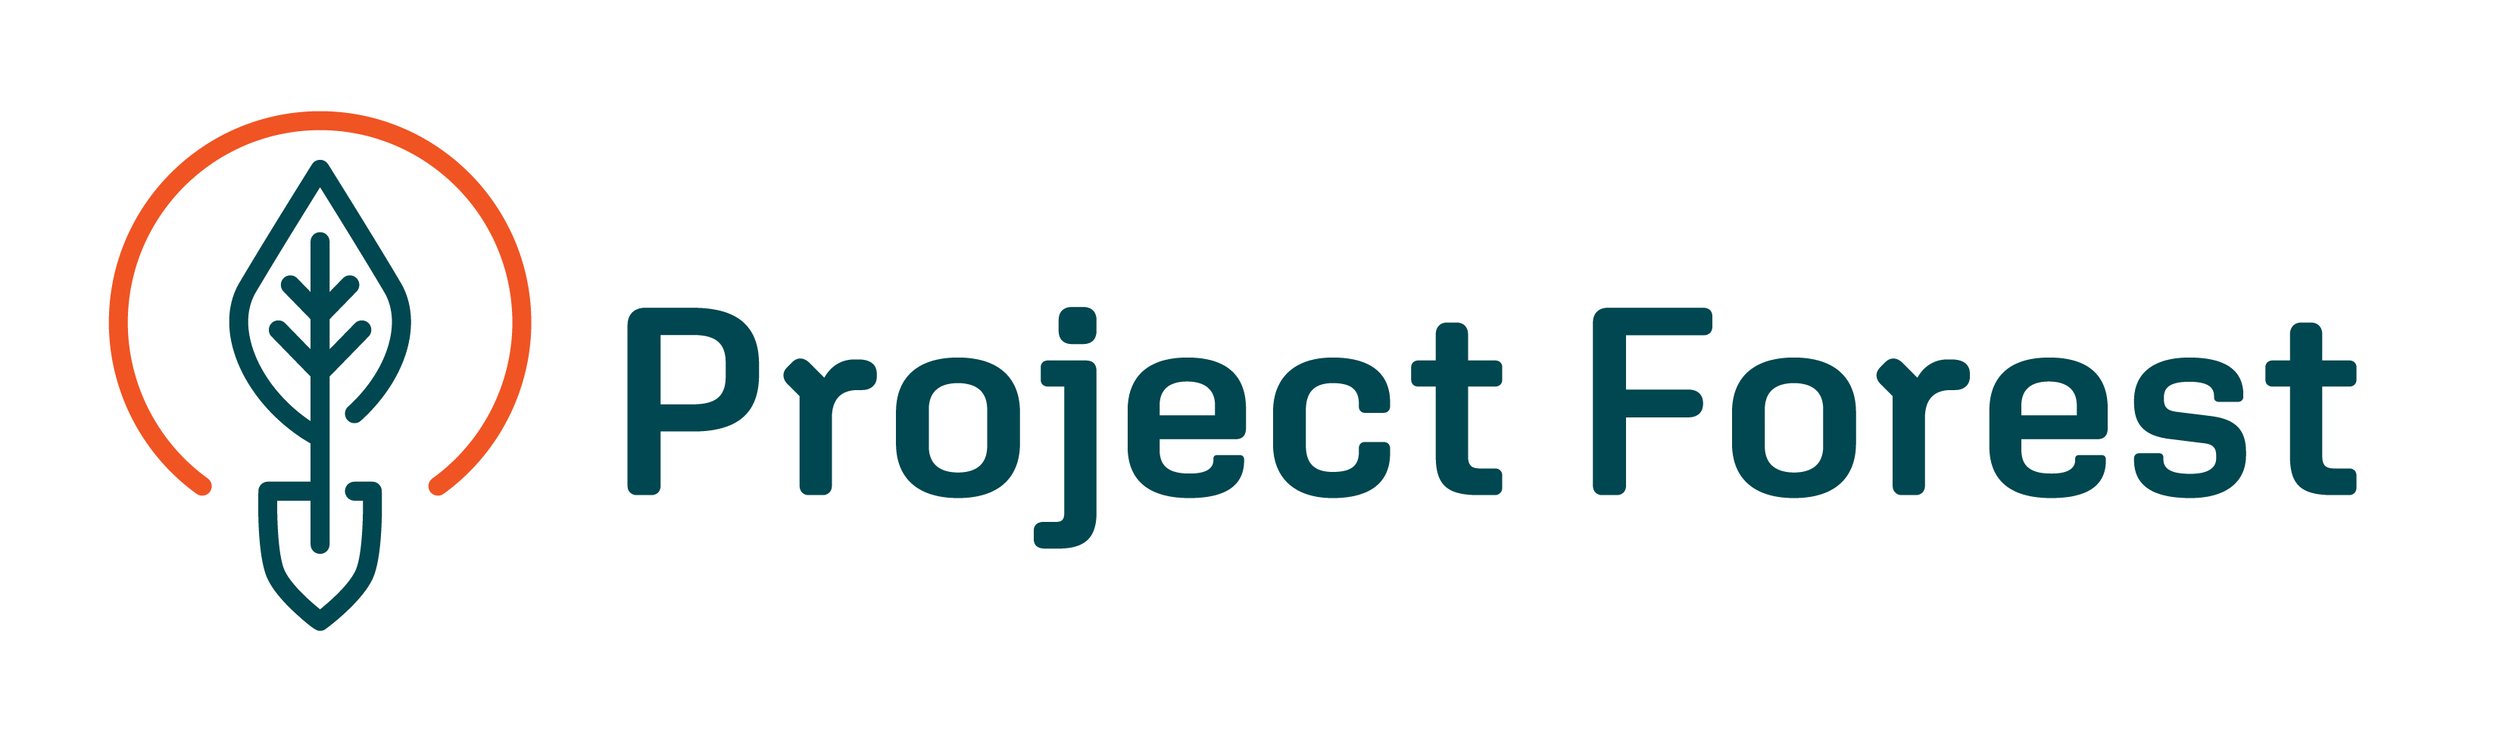 Project Forest logo_horizontal.jpg